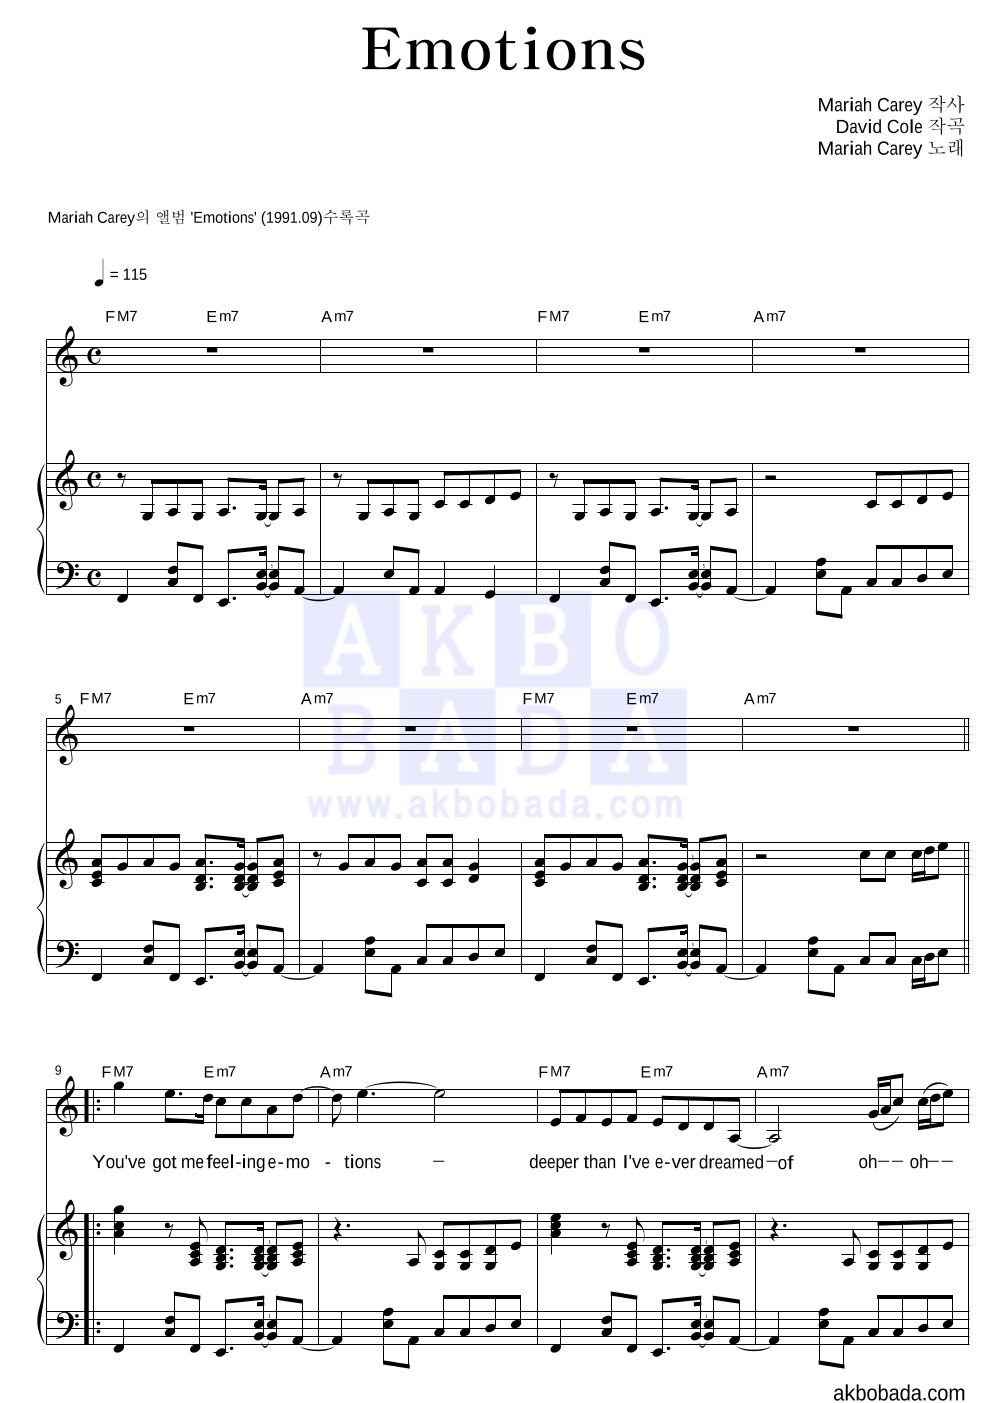 Mariah Carey - Emotions 피아노 3단 악보 